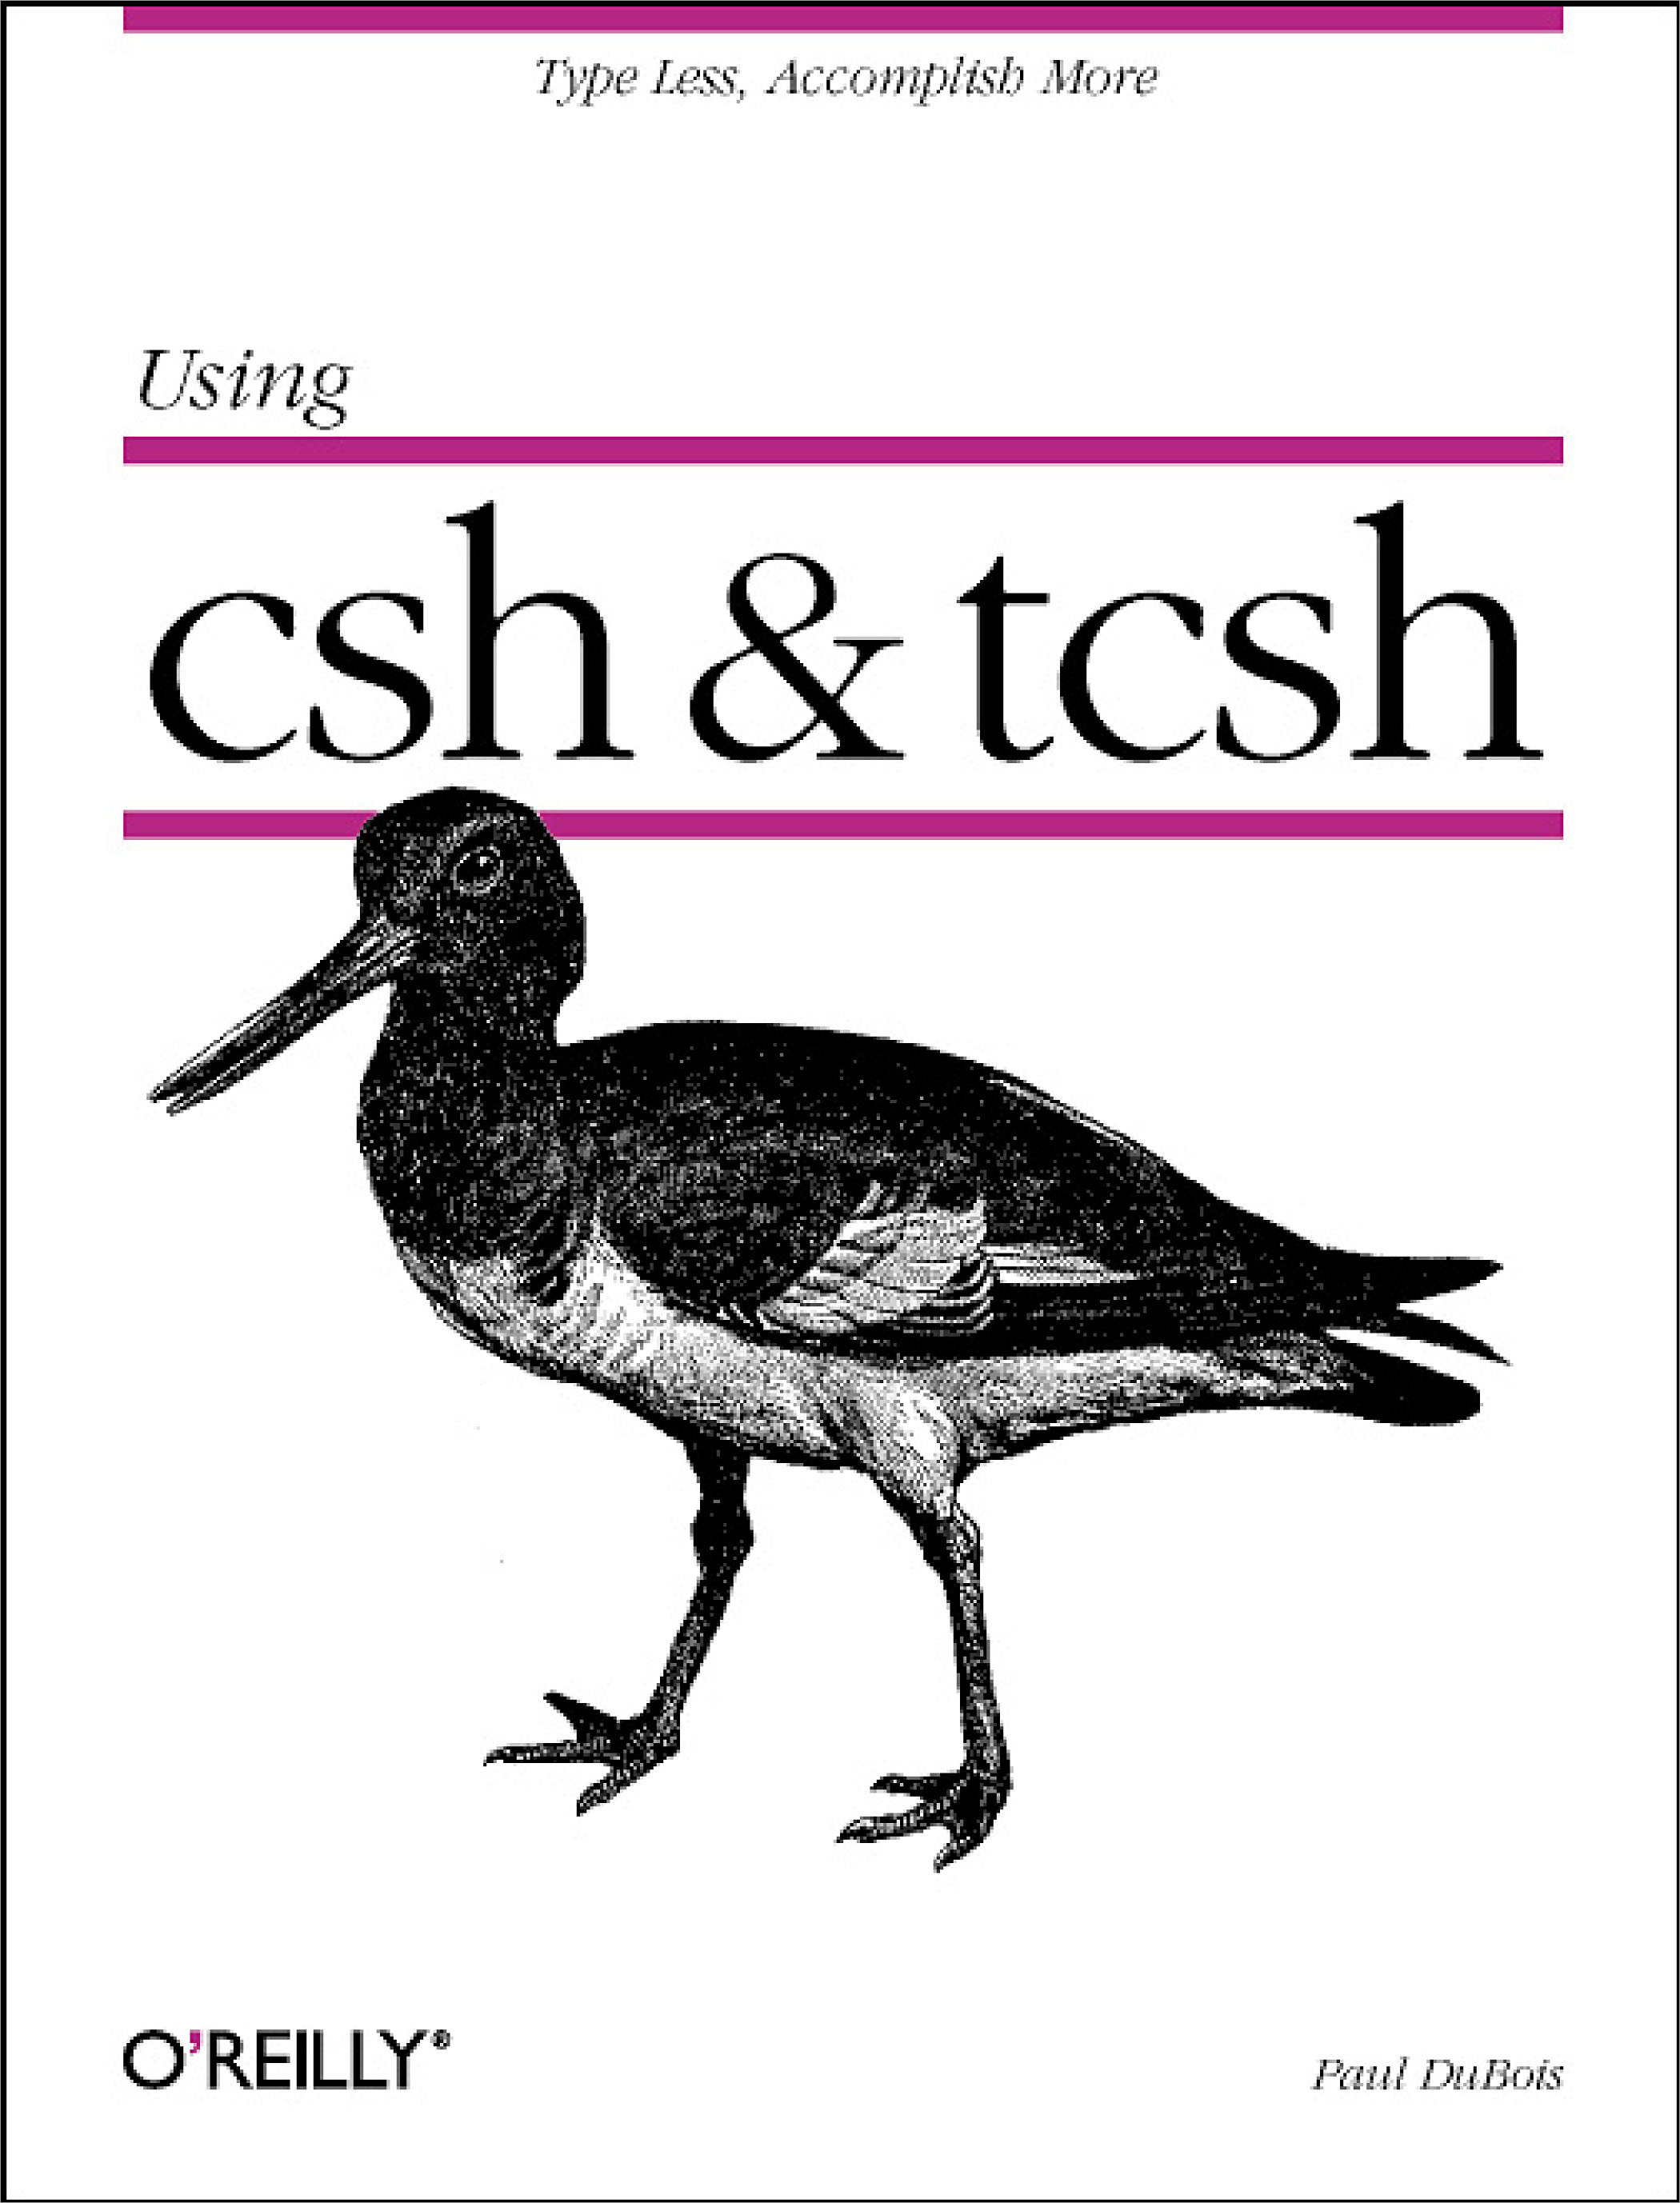 Using csh & tcsh - 10-14.99